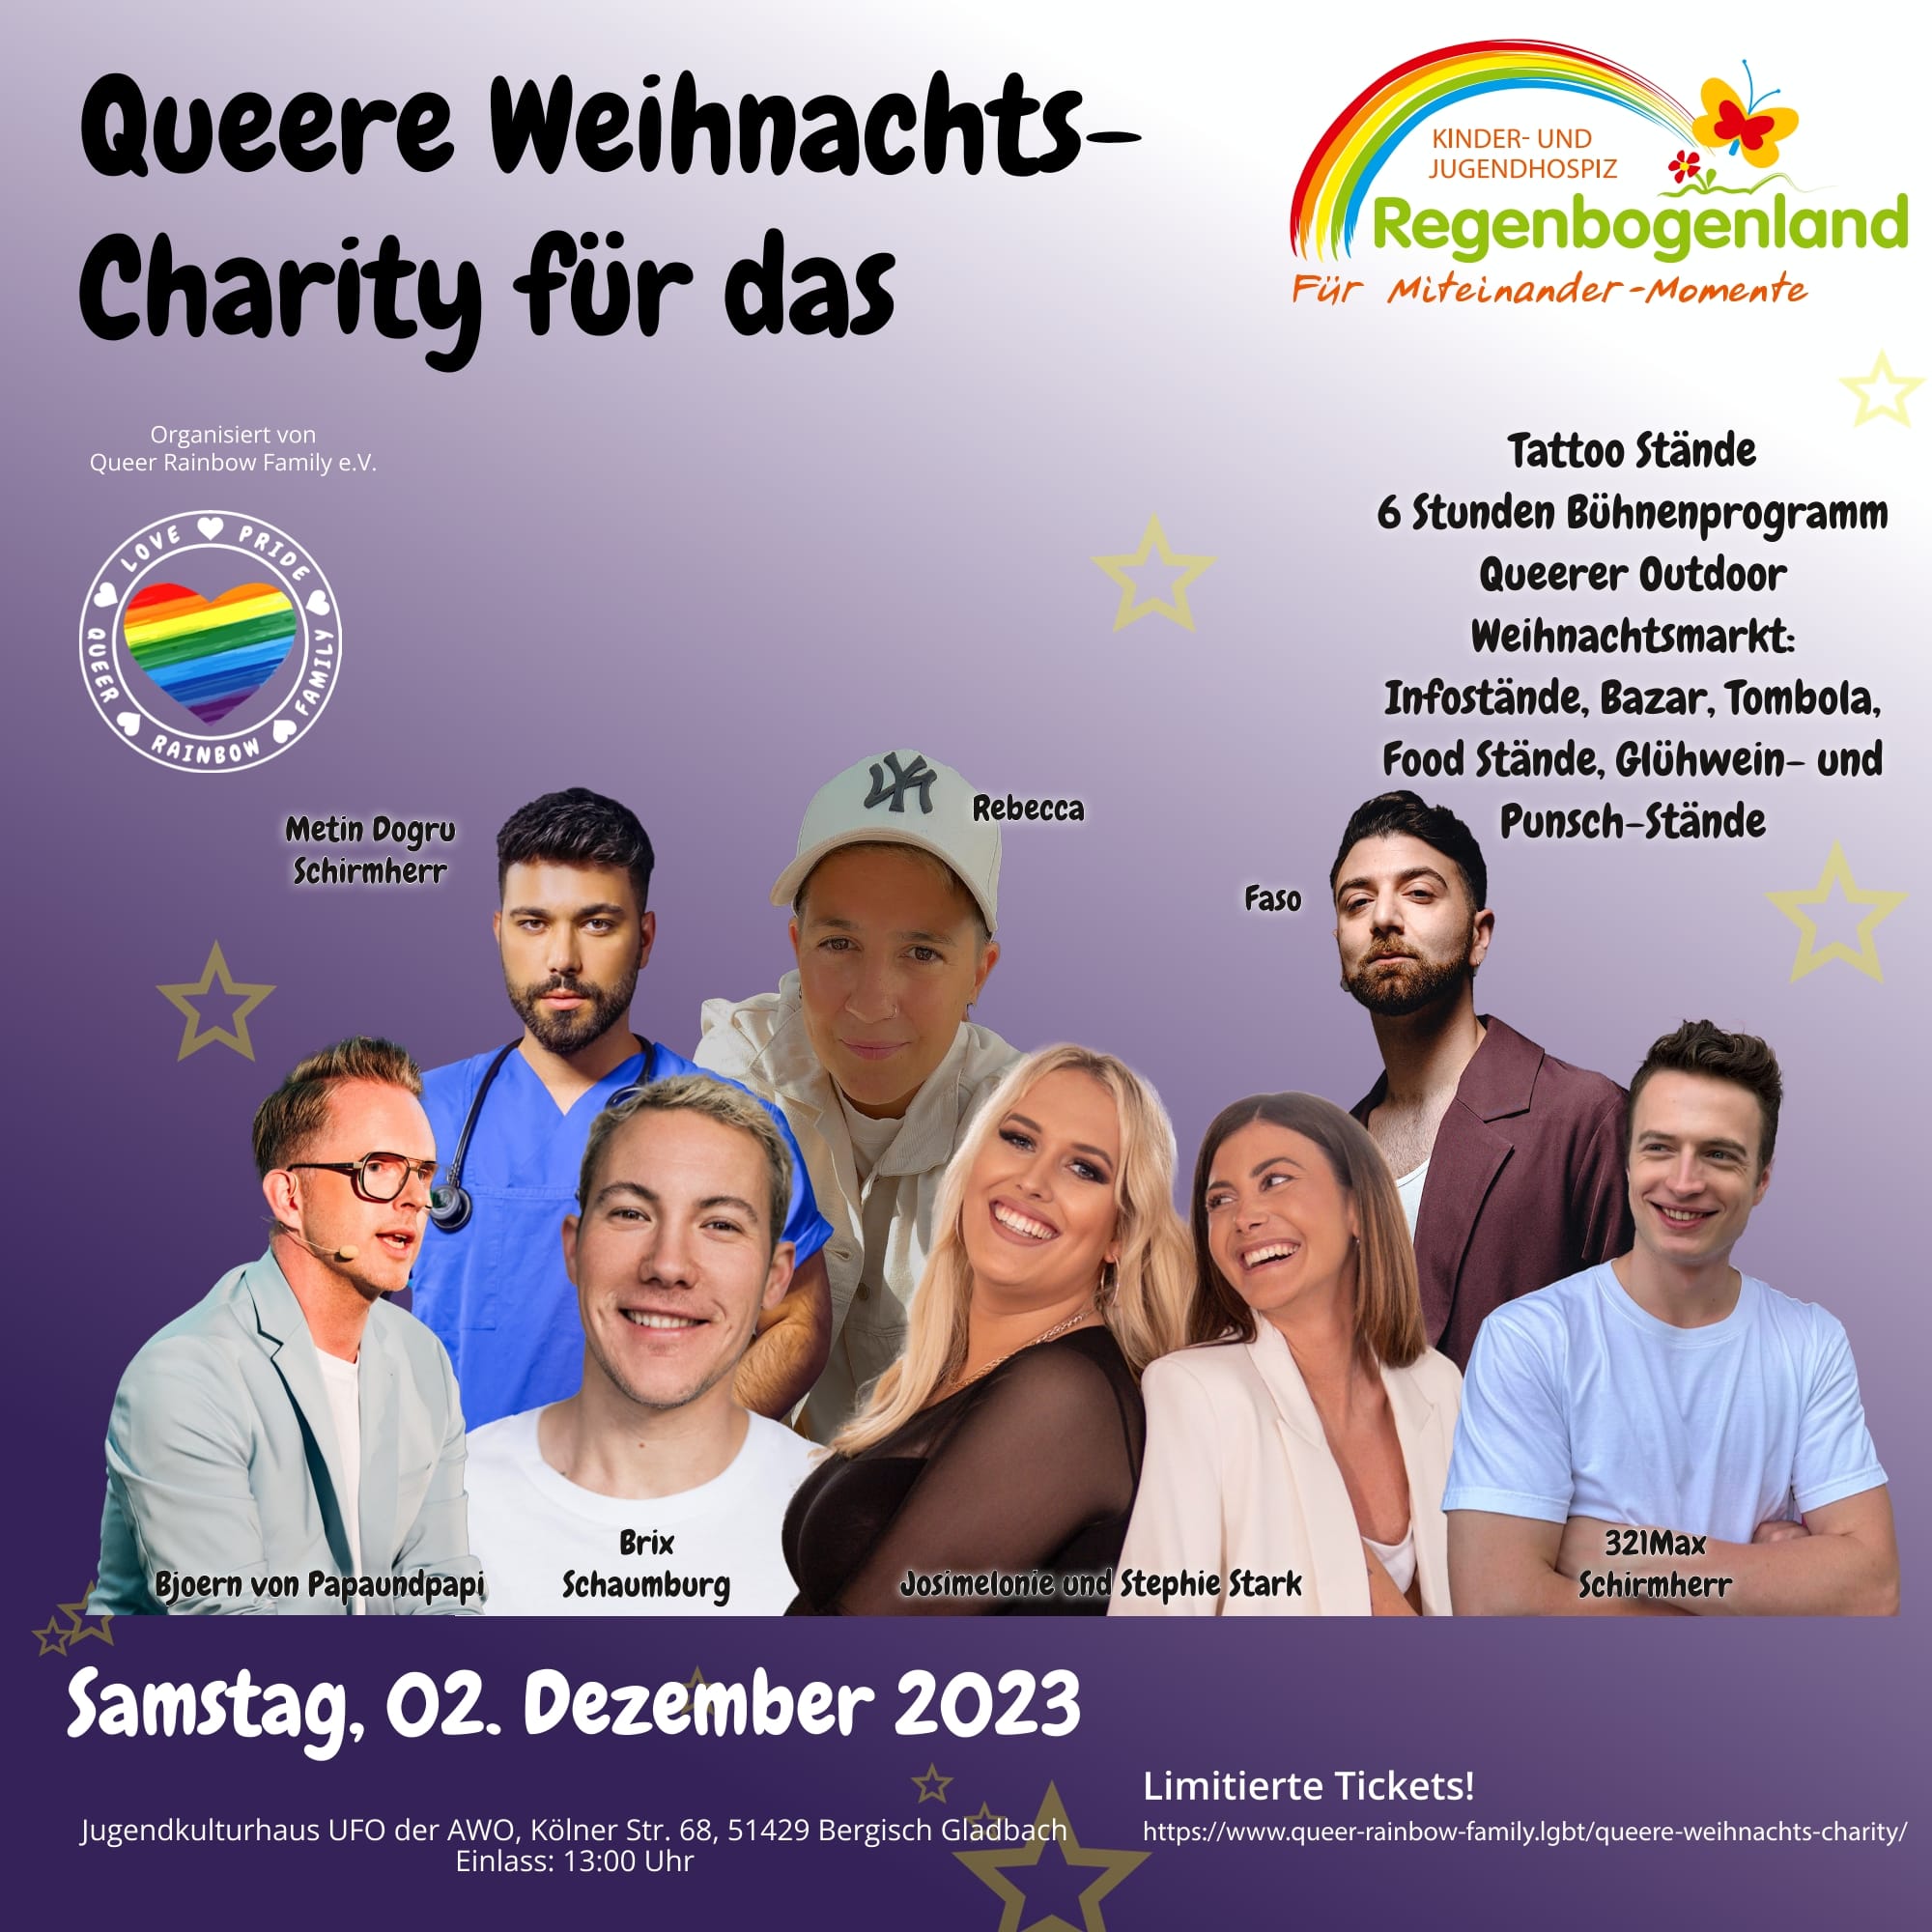 Queeres Weihnachts Charity Queer Rainbwo Family 2. Dezember Vorderseite